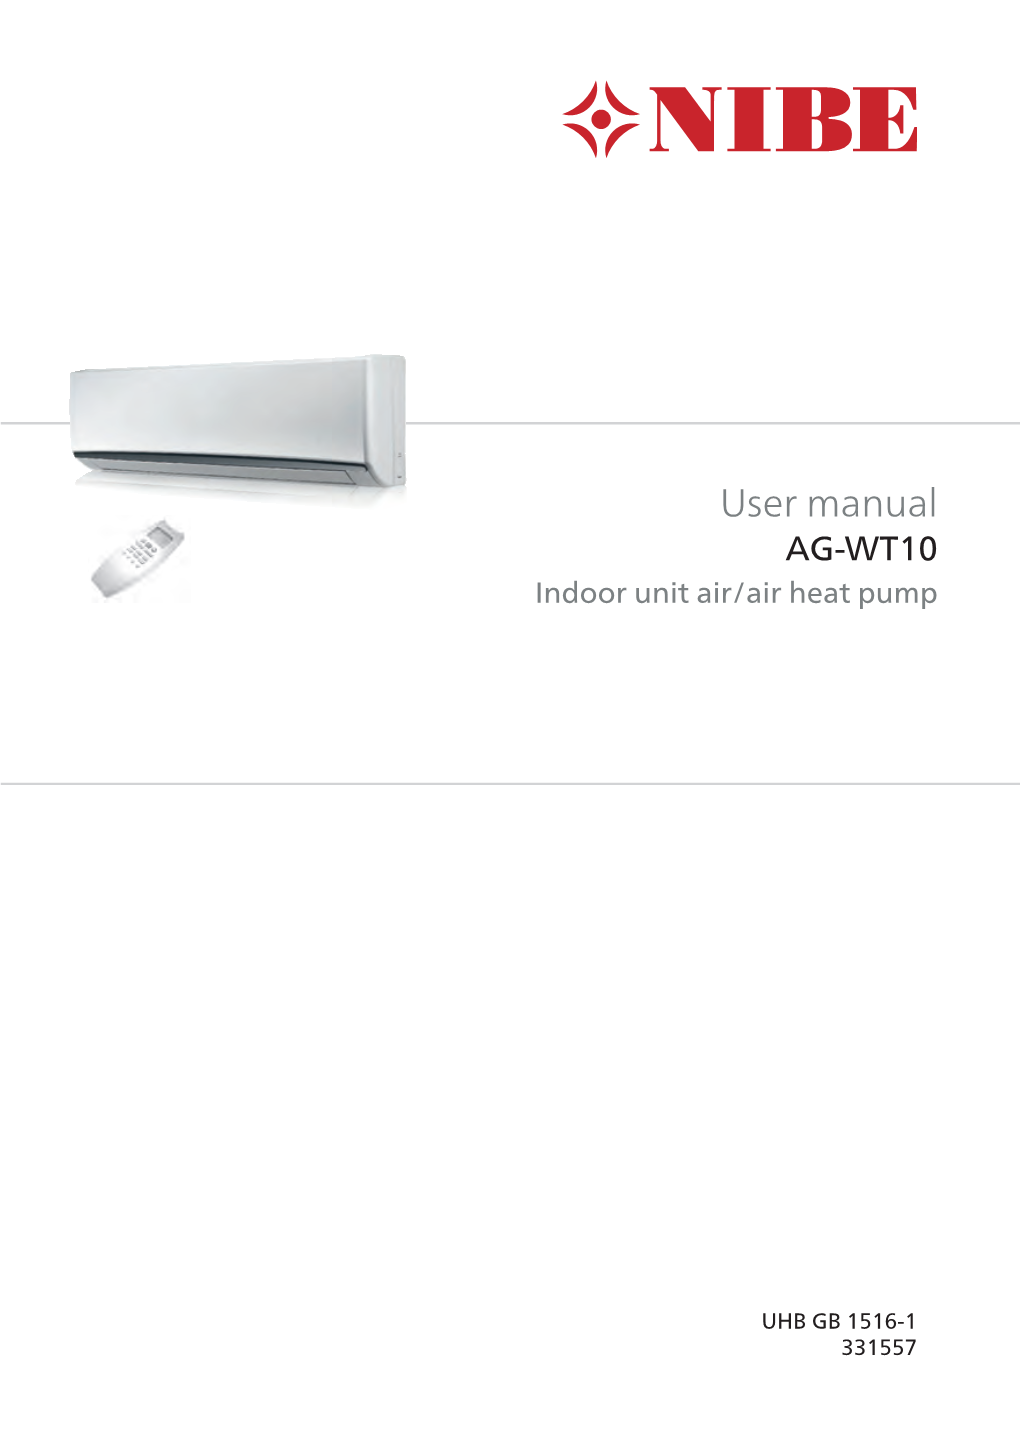 User Manual AG-WT10 Indoor Unit Air/Air Heat Pump